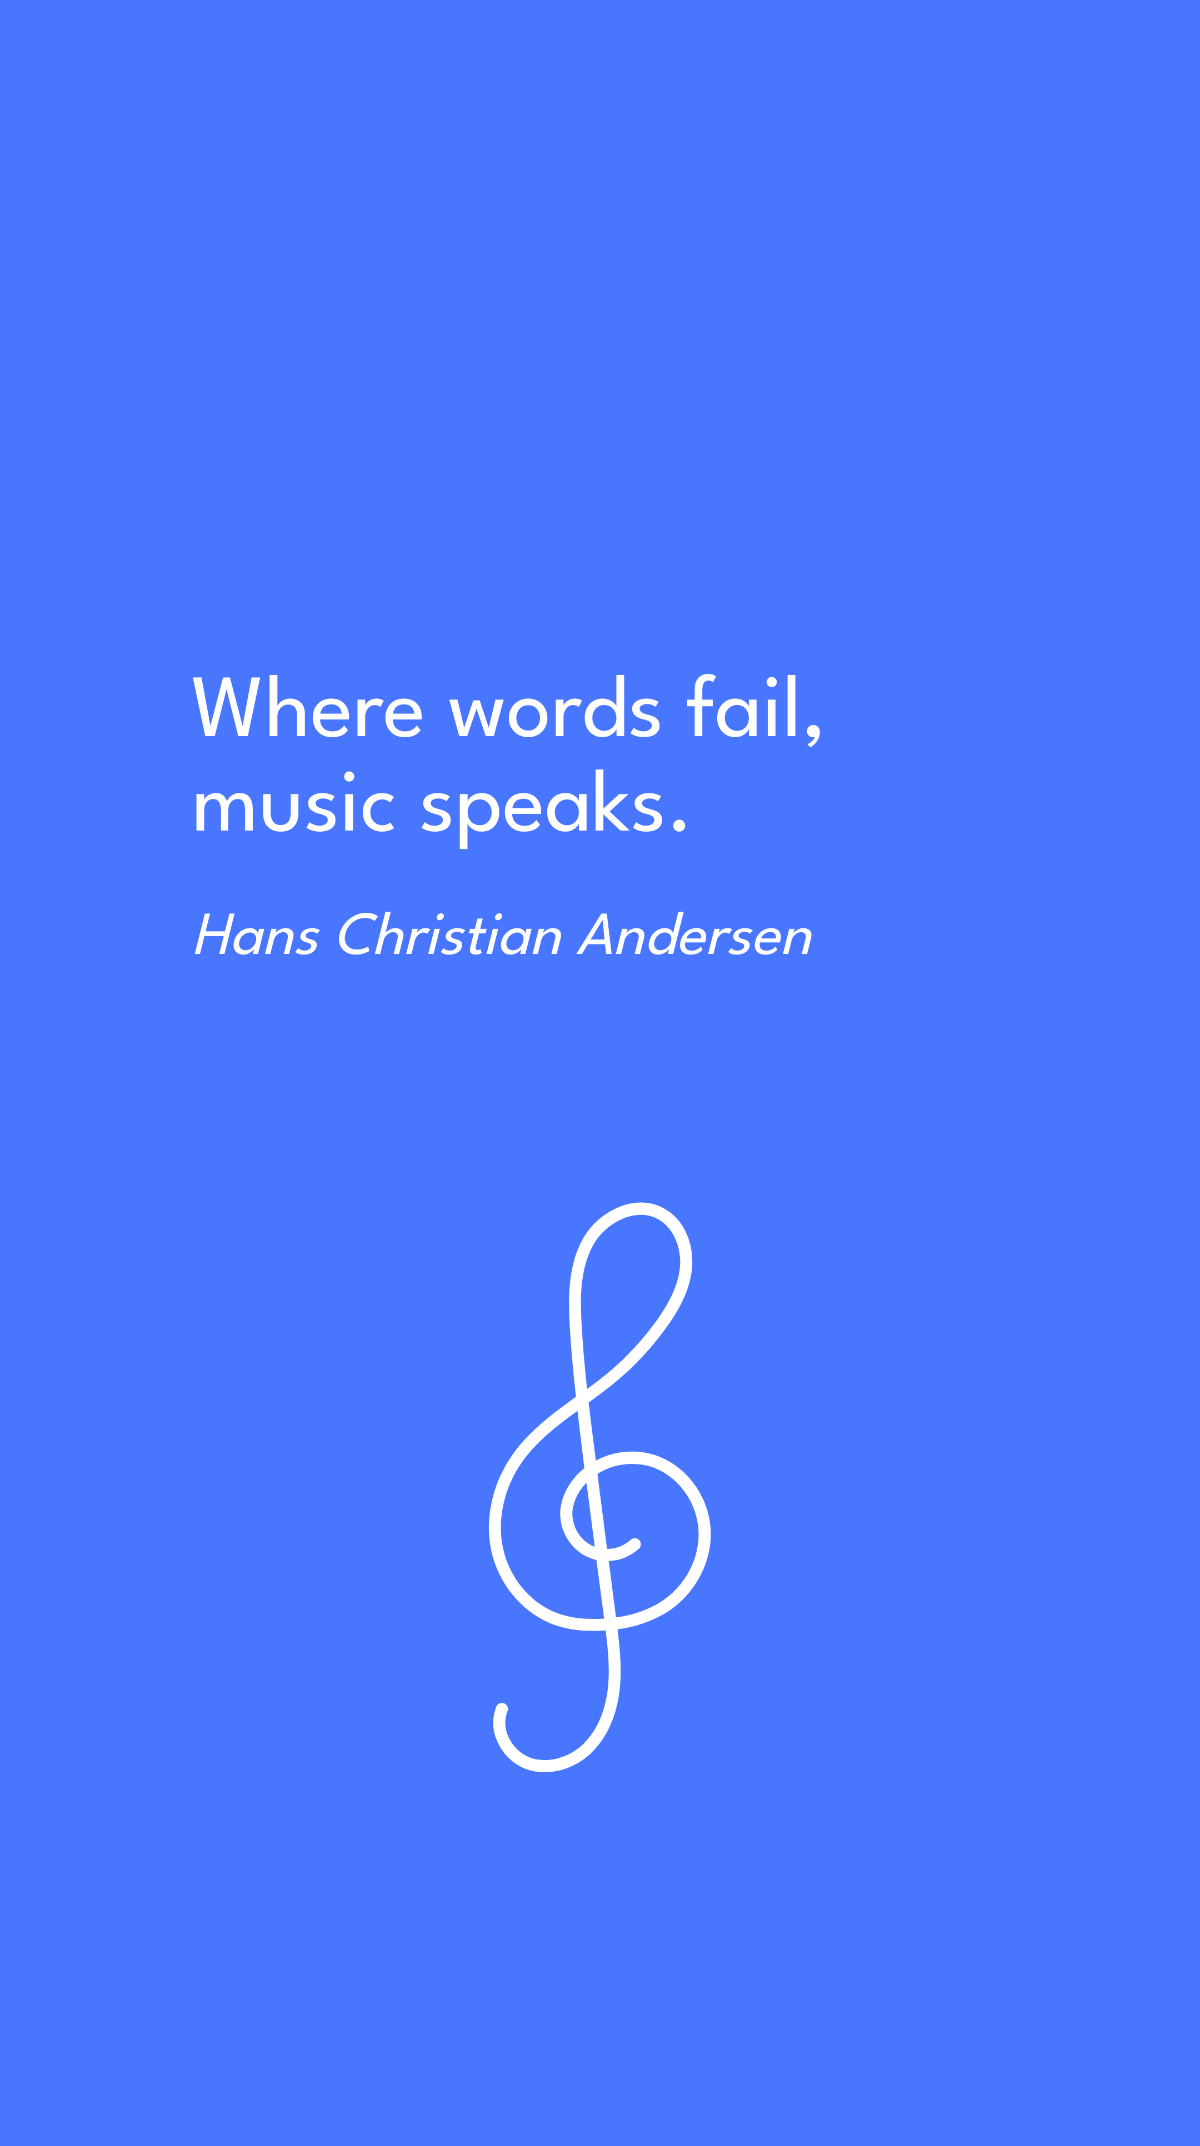 Hans Christian Andersen - Where words fail, music speaks. Template